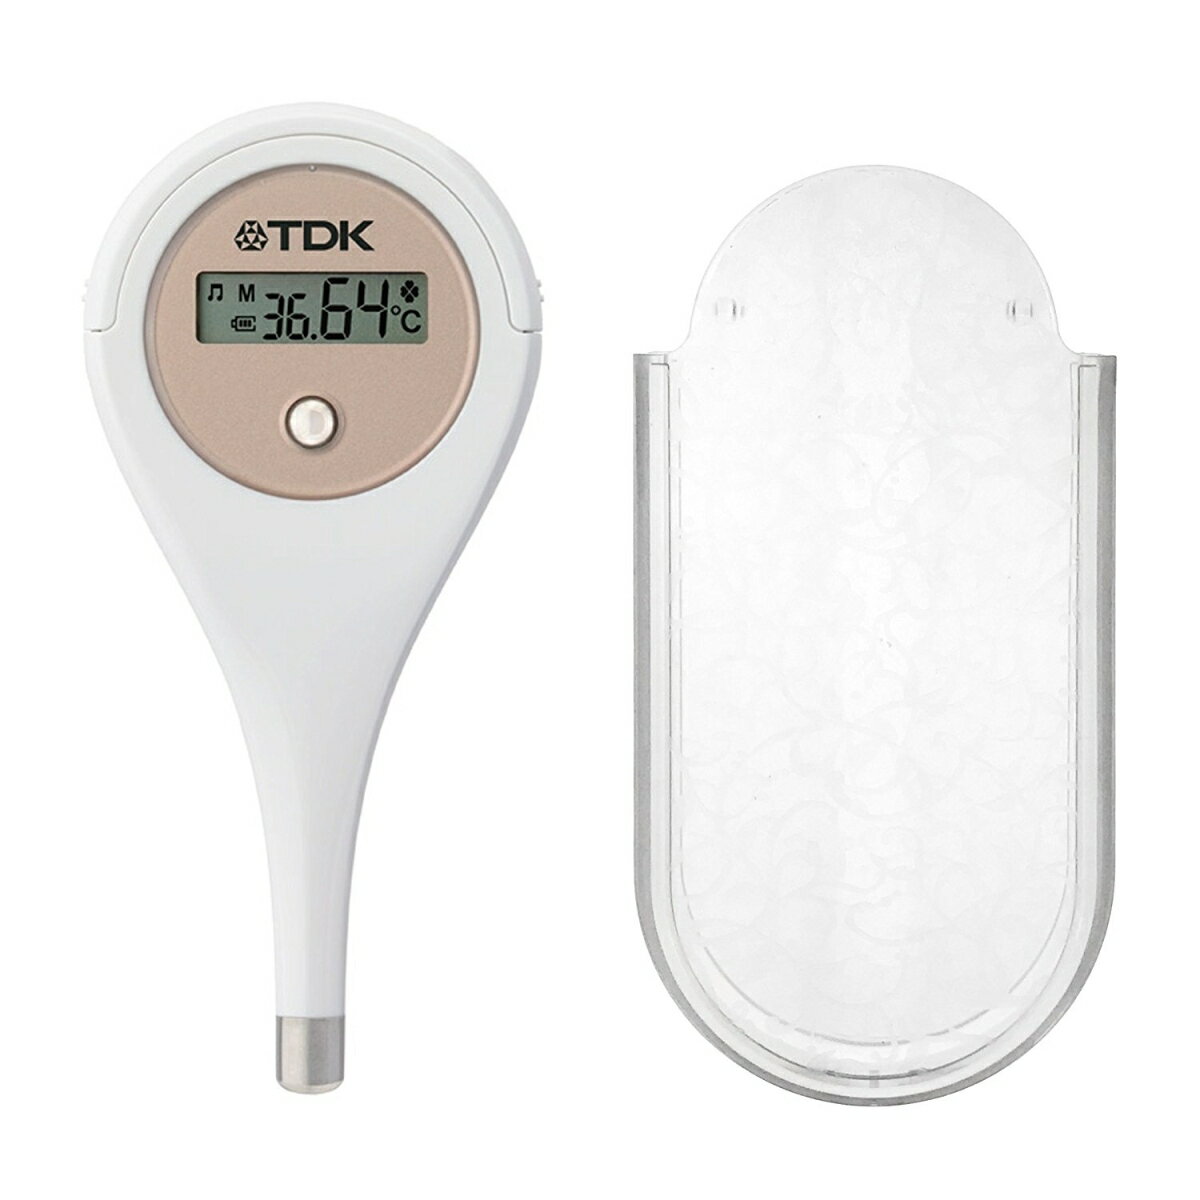 TDK 婦人用電子体温計 HT-301 (毎日検温アプリで管理 